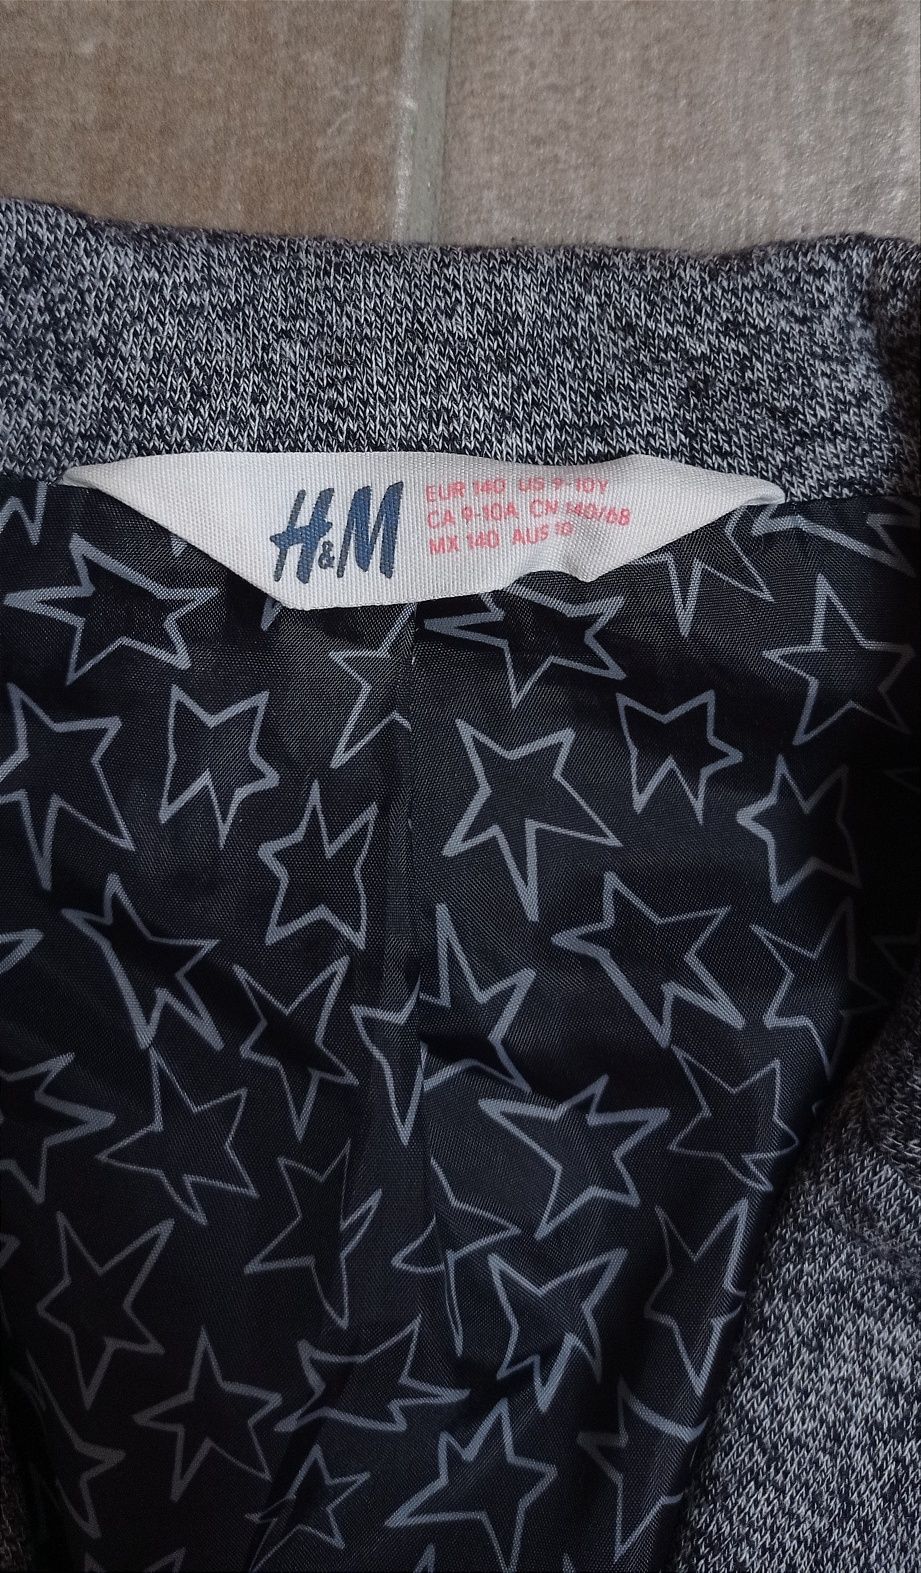 Пиджак для школы H&M на 9-10 лет